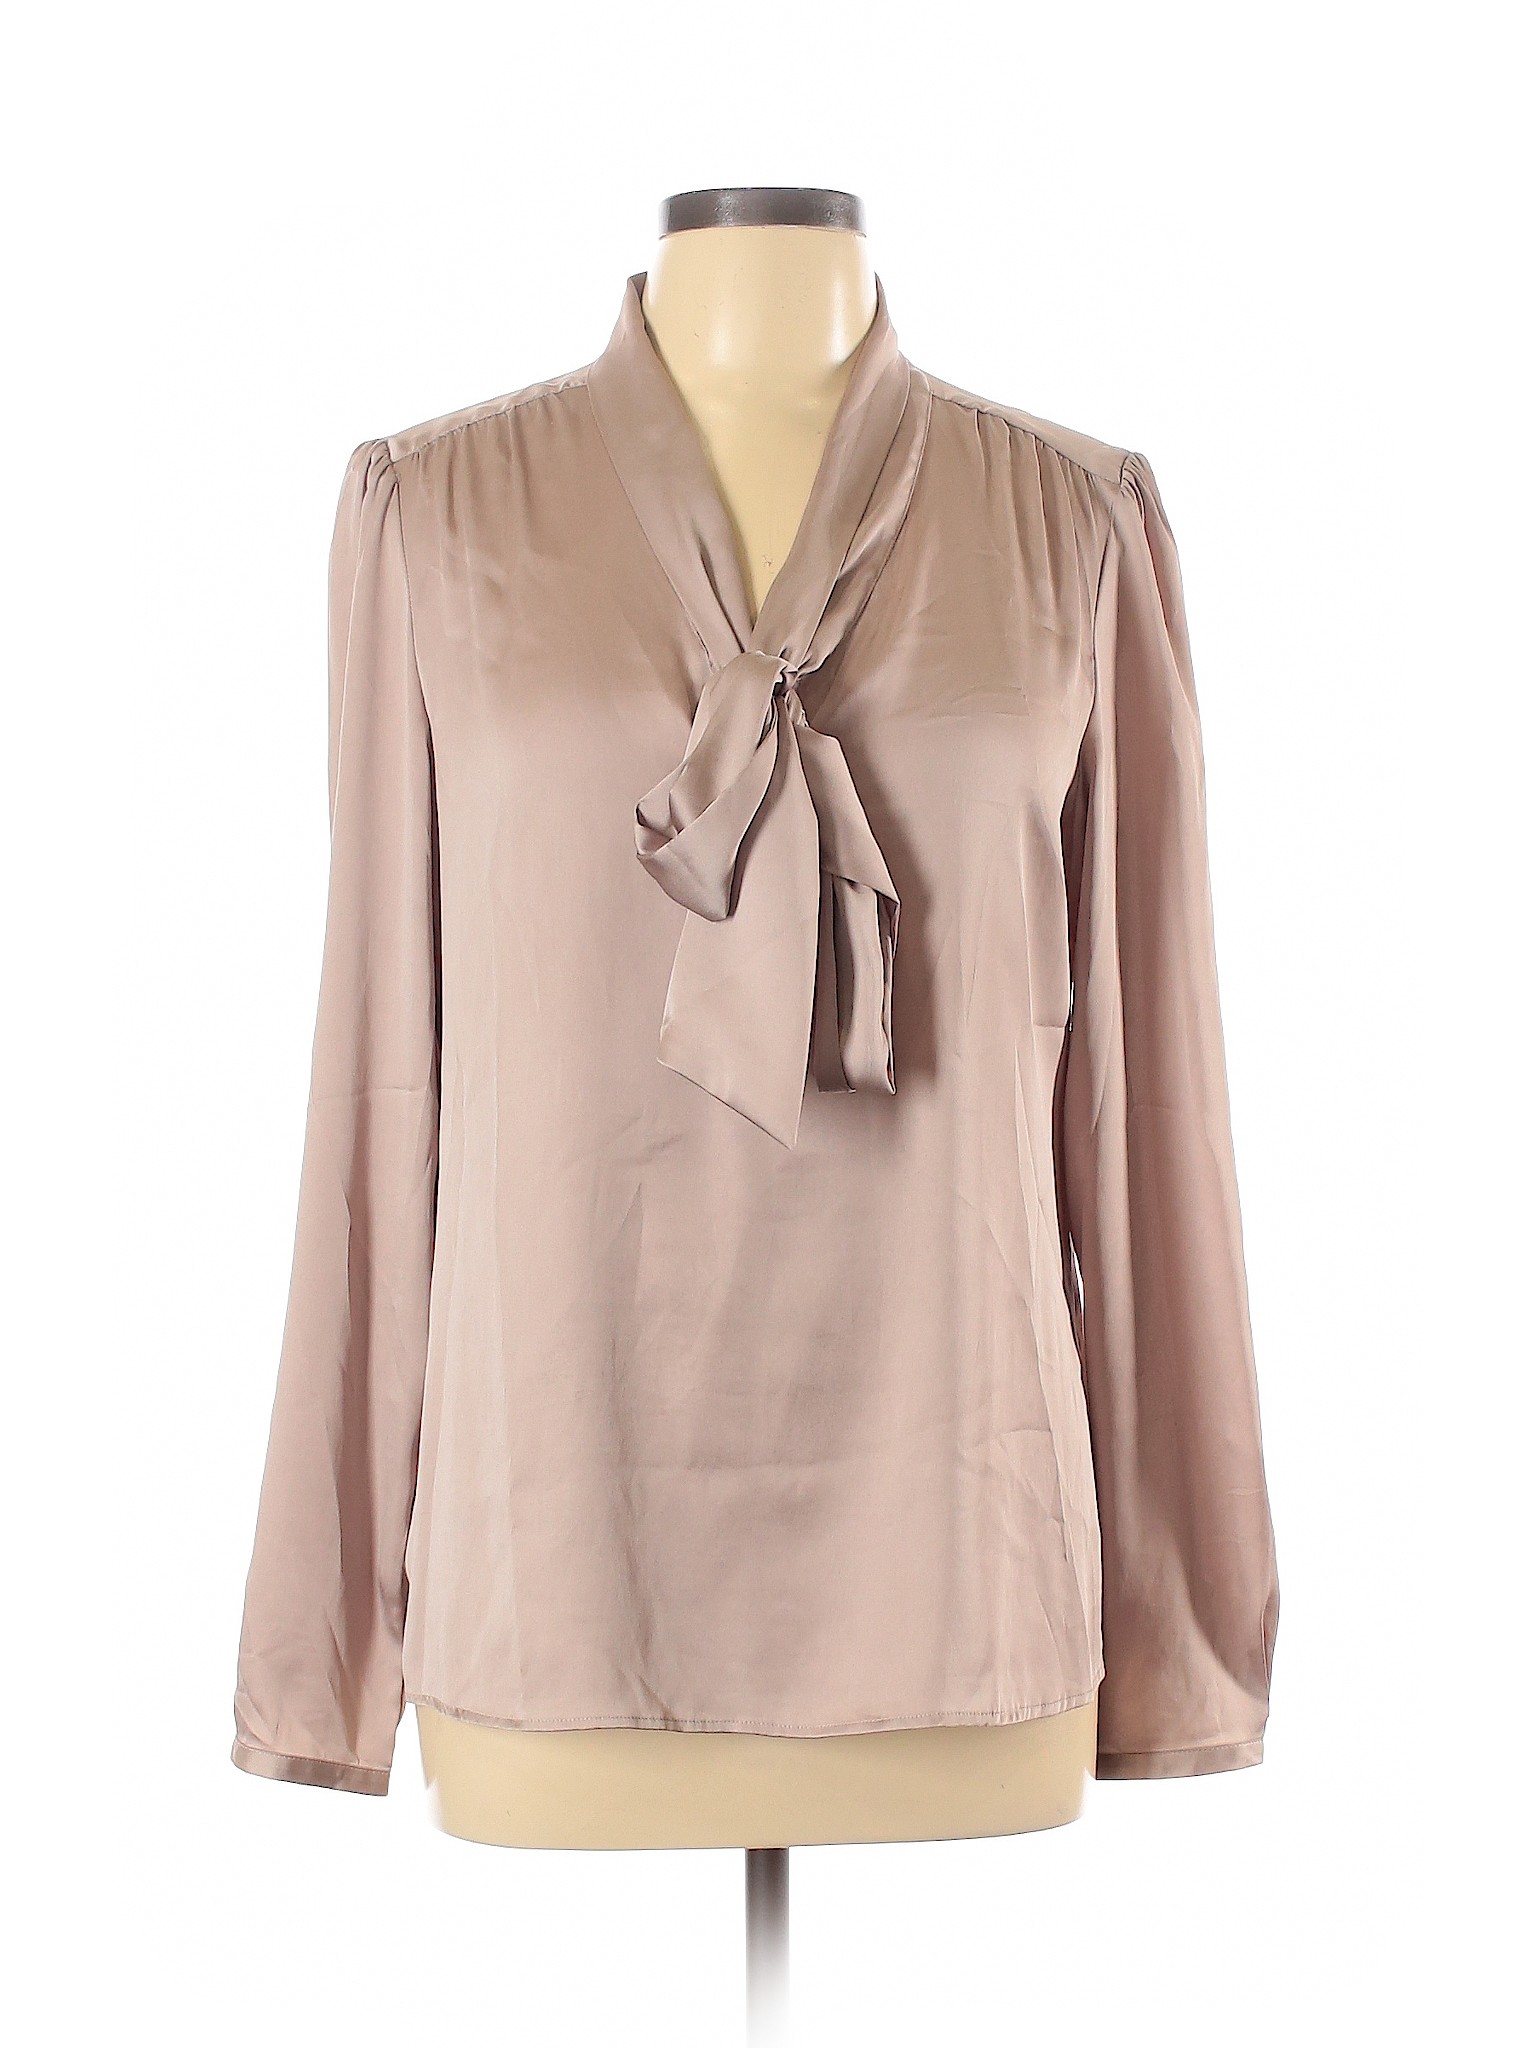 Ann Taylor LOFT Women Brown Long Sleeve Blouse L | eBay